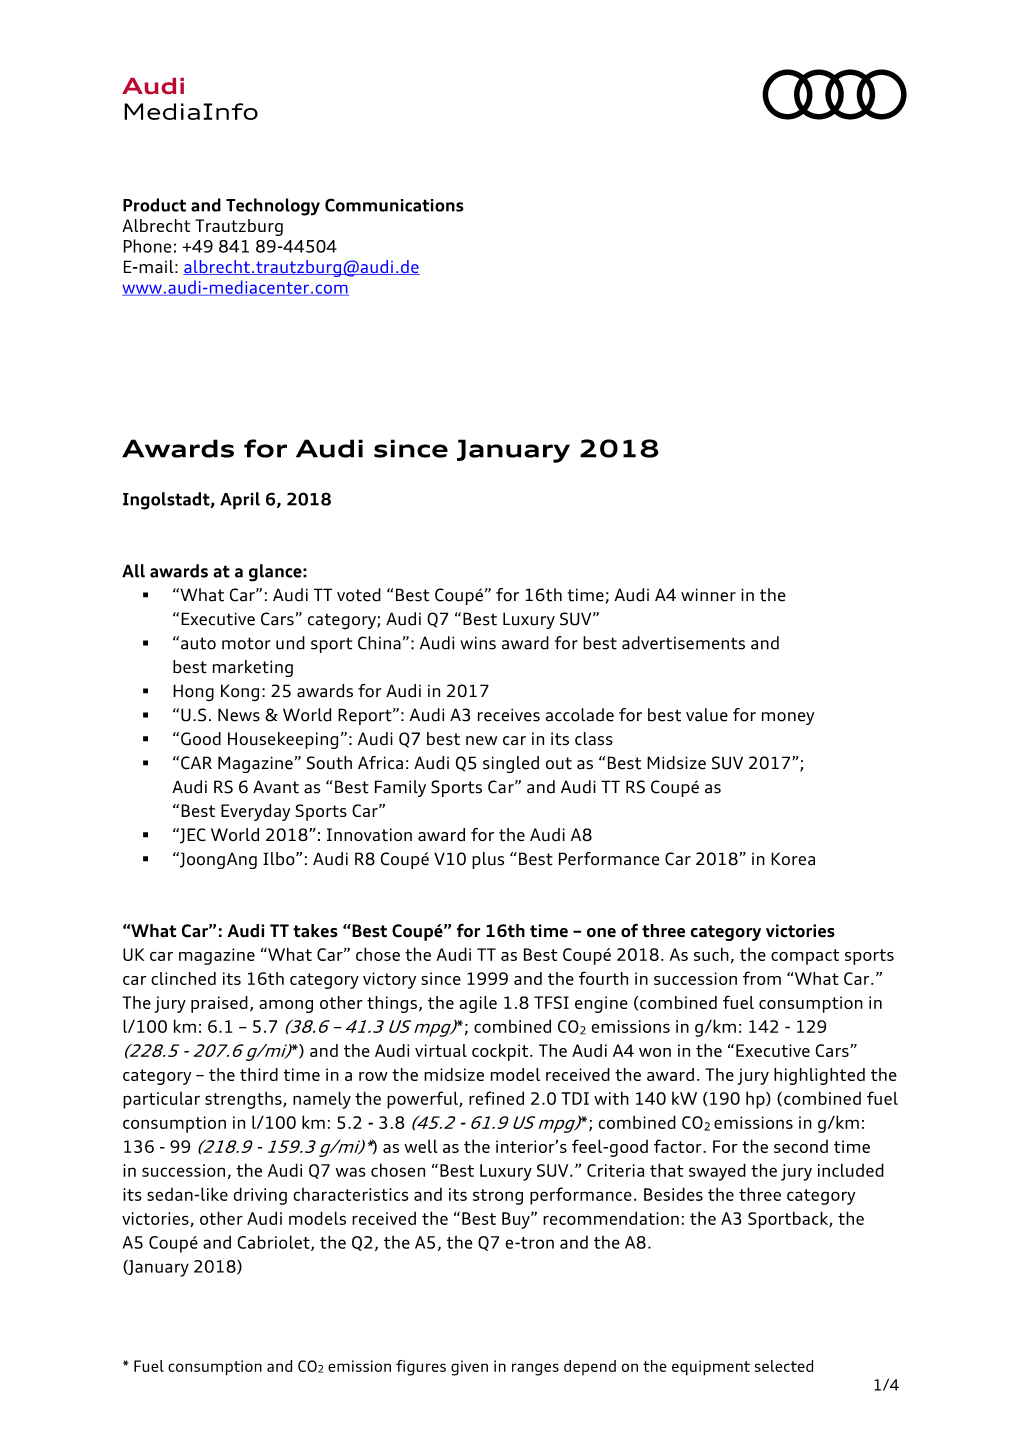 Awards for Audi Since January 2018